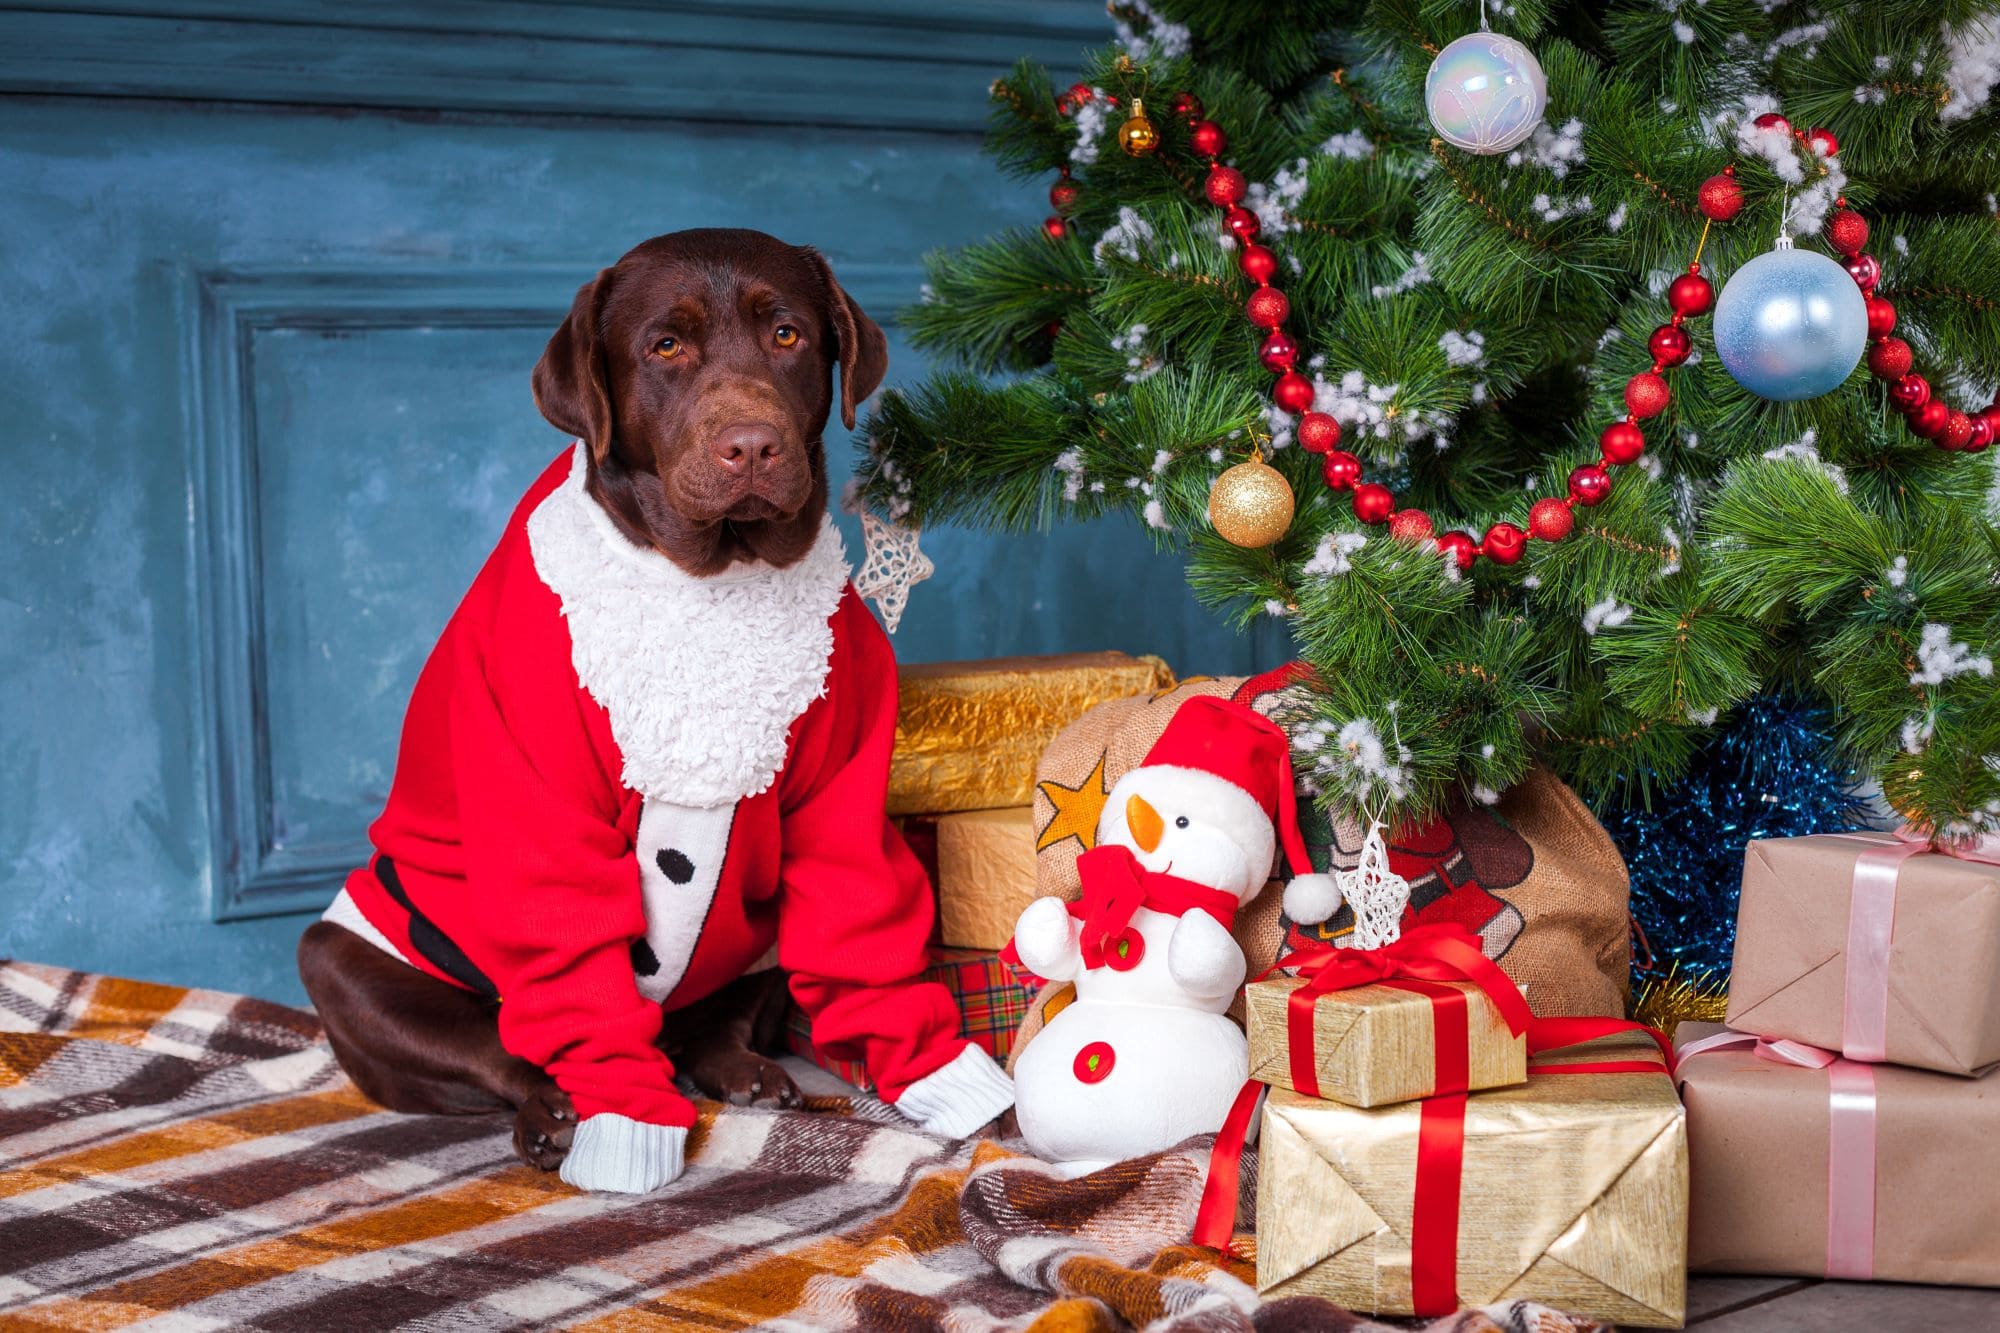 Sweetie Pet-proof tips for this festive season - Sweetie